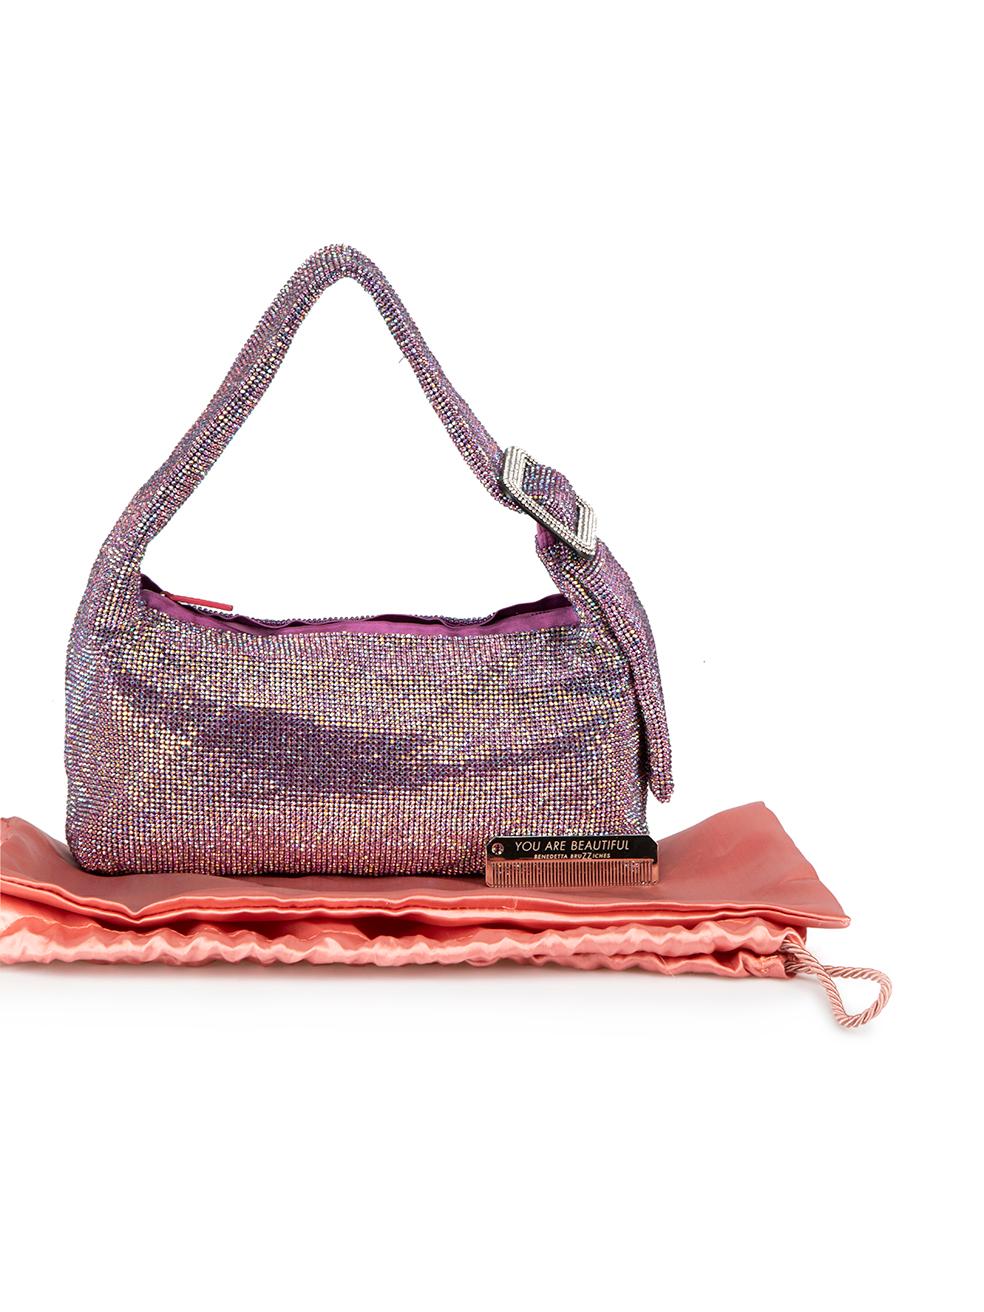 Benedetta Bruzziches Women's Pina Bausch Crystal-Embellished Satin Shoulder Bag 3